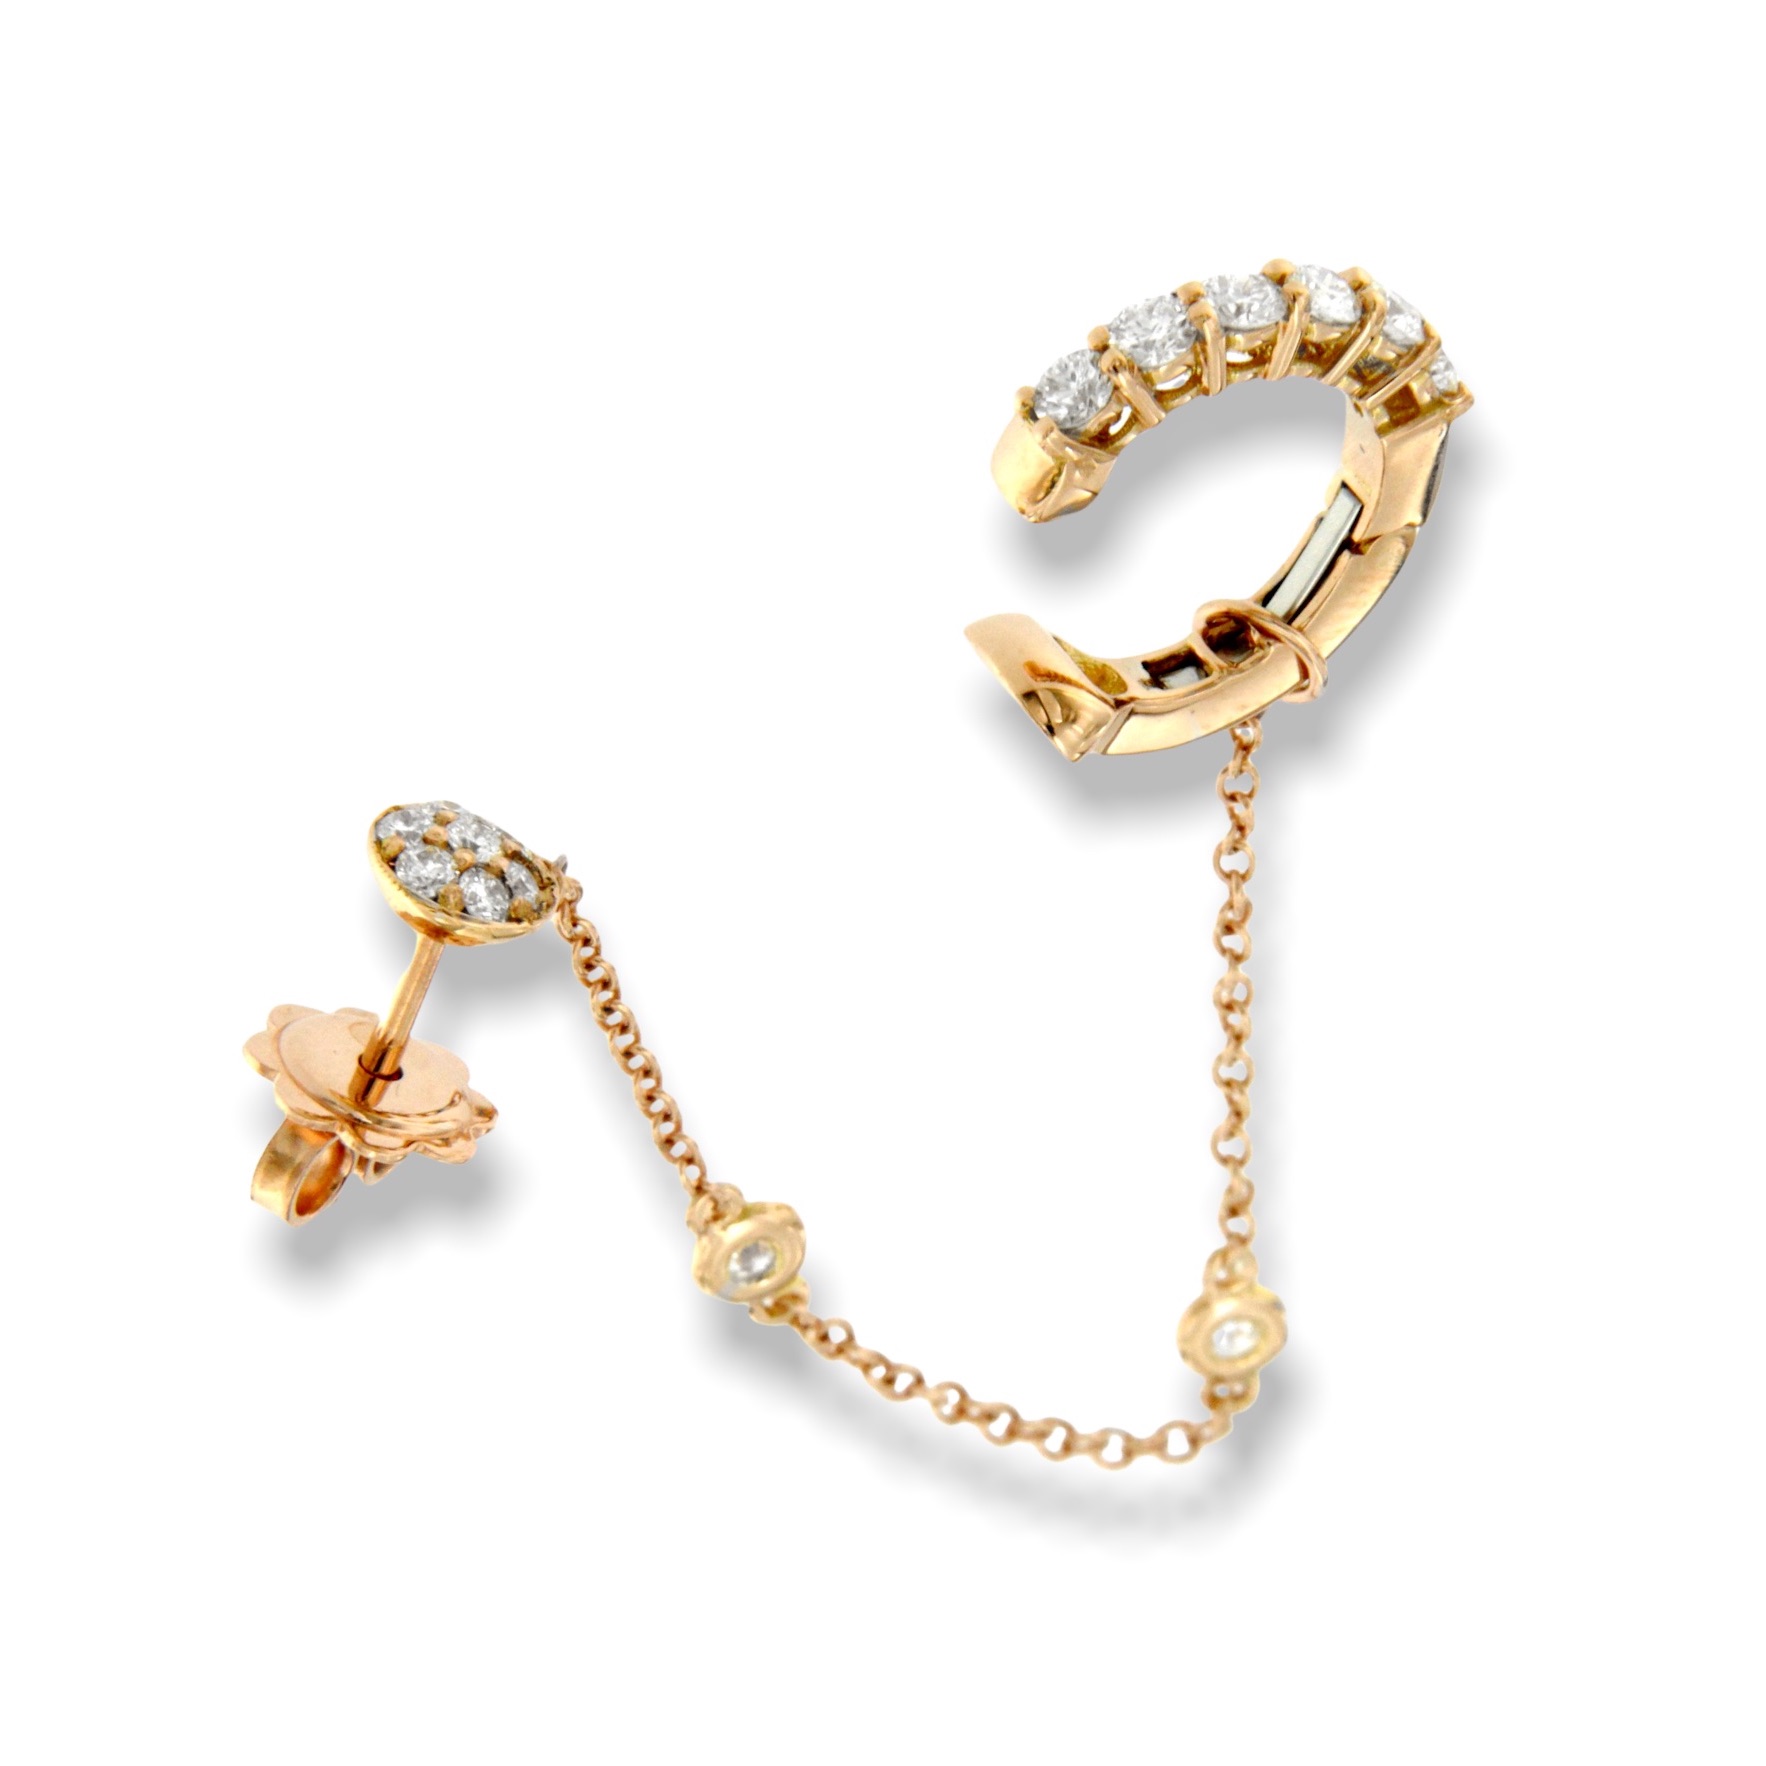 Monorecchino Helix oro rosa brillanti Helix single earring in rose gold with diamonds sconto discount